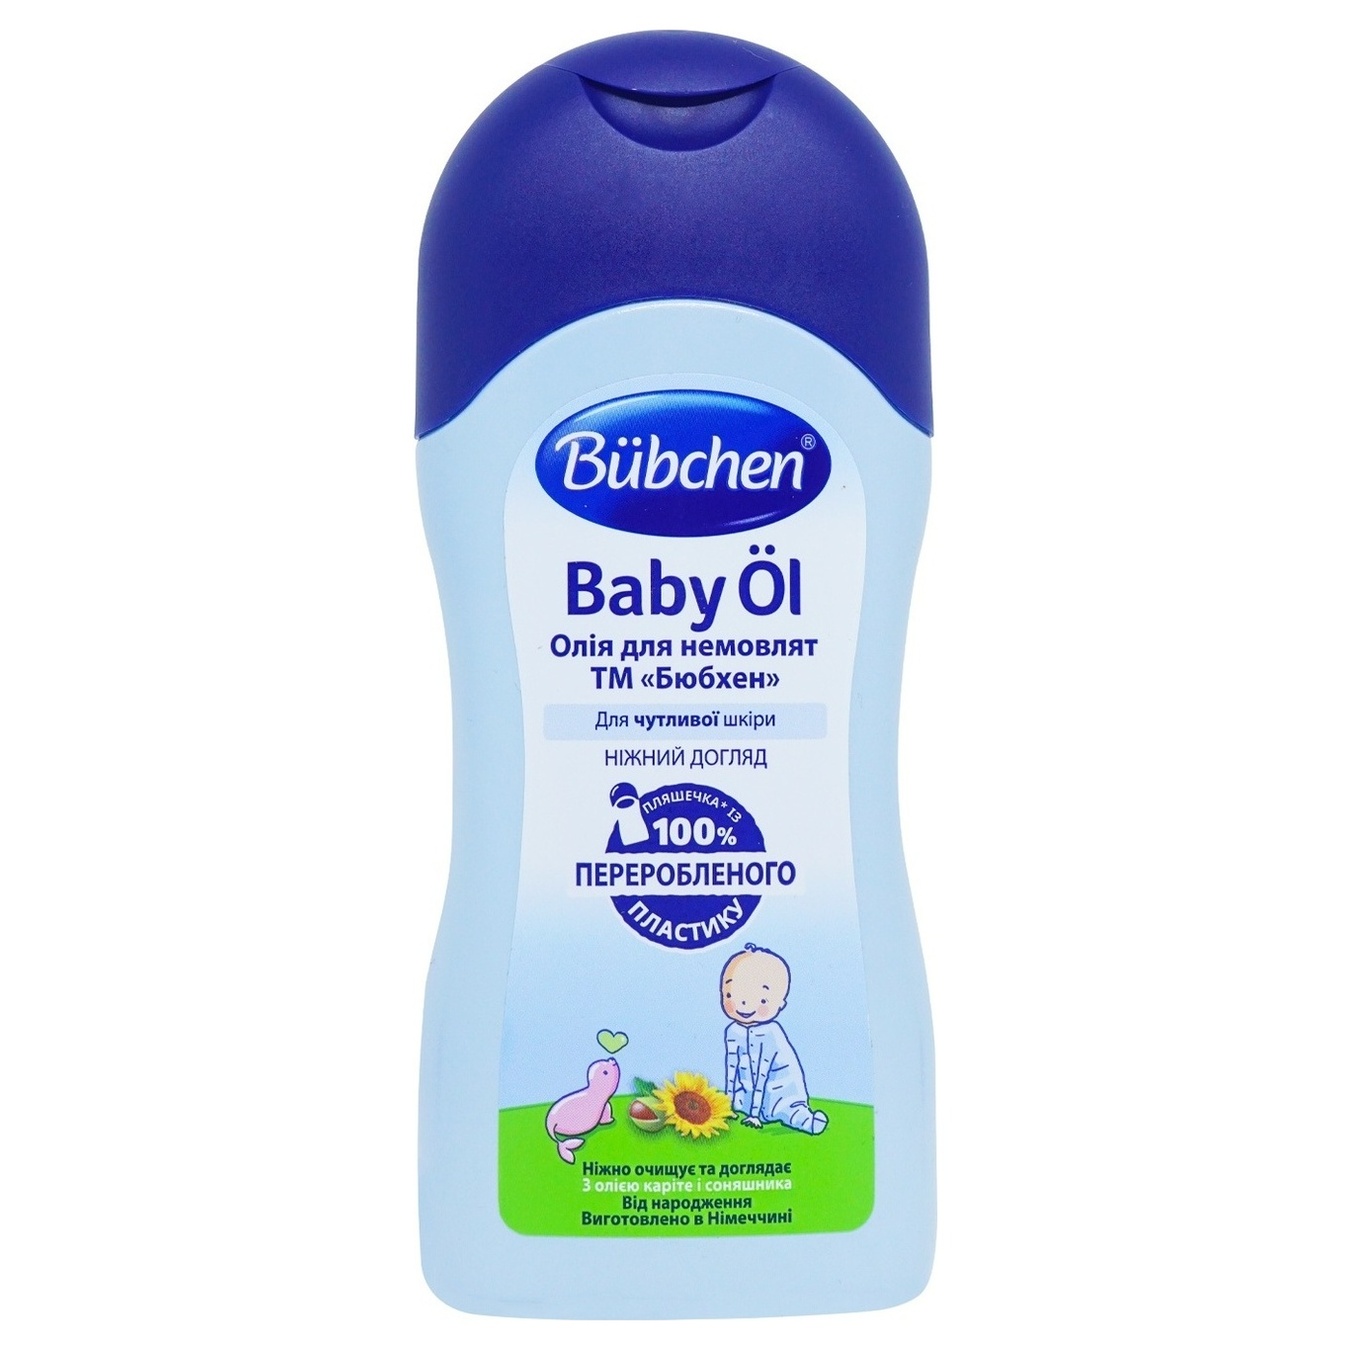 Bubchen cleansing oil for children 200 ml